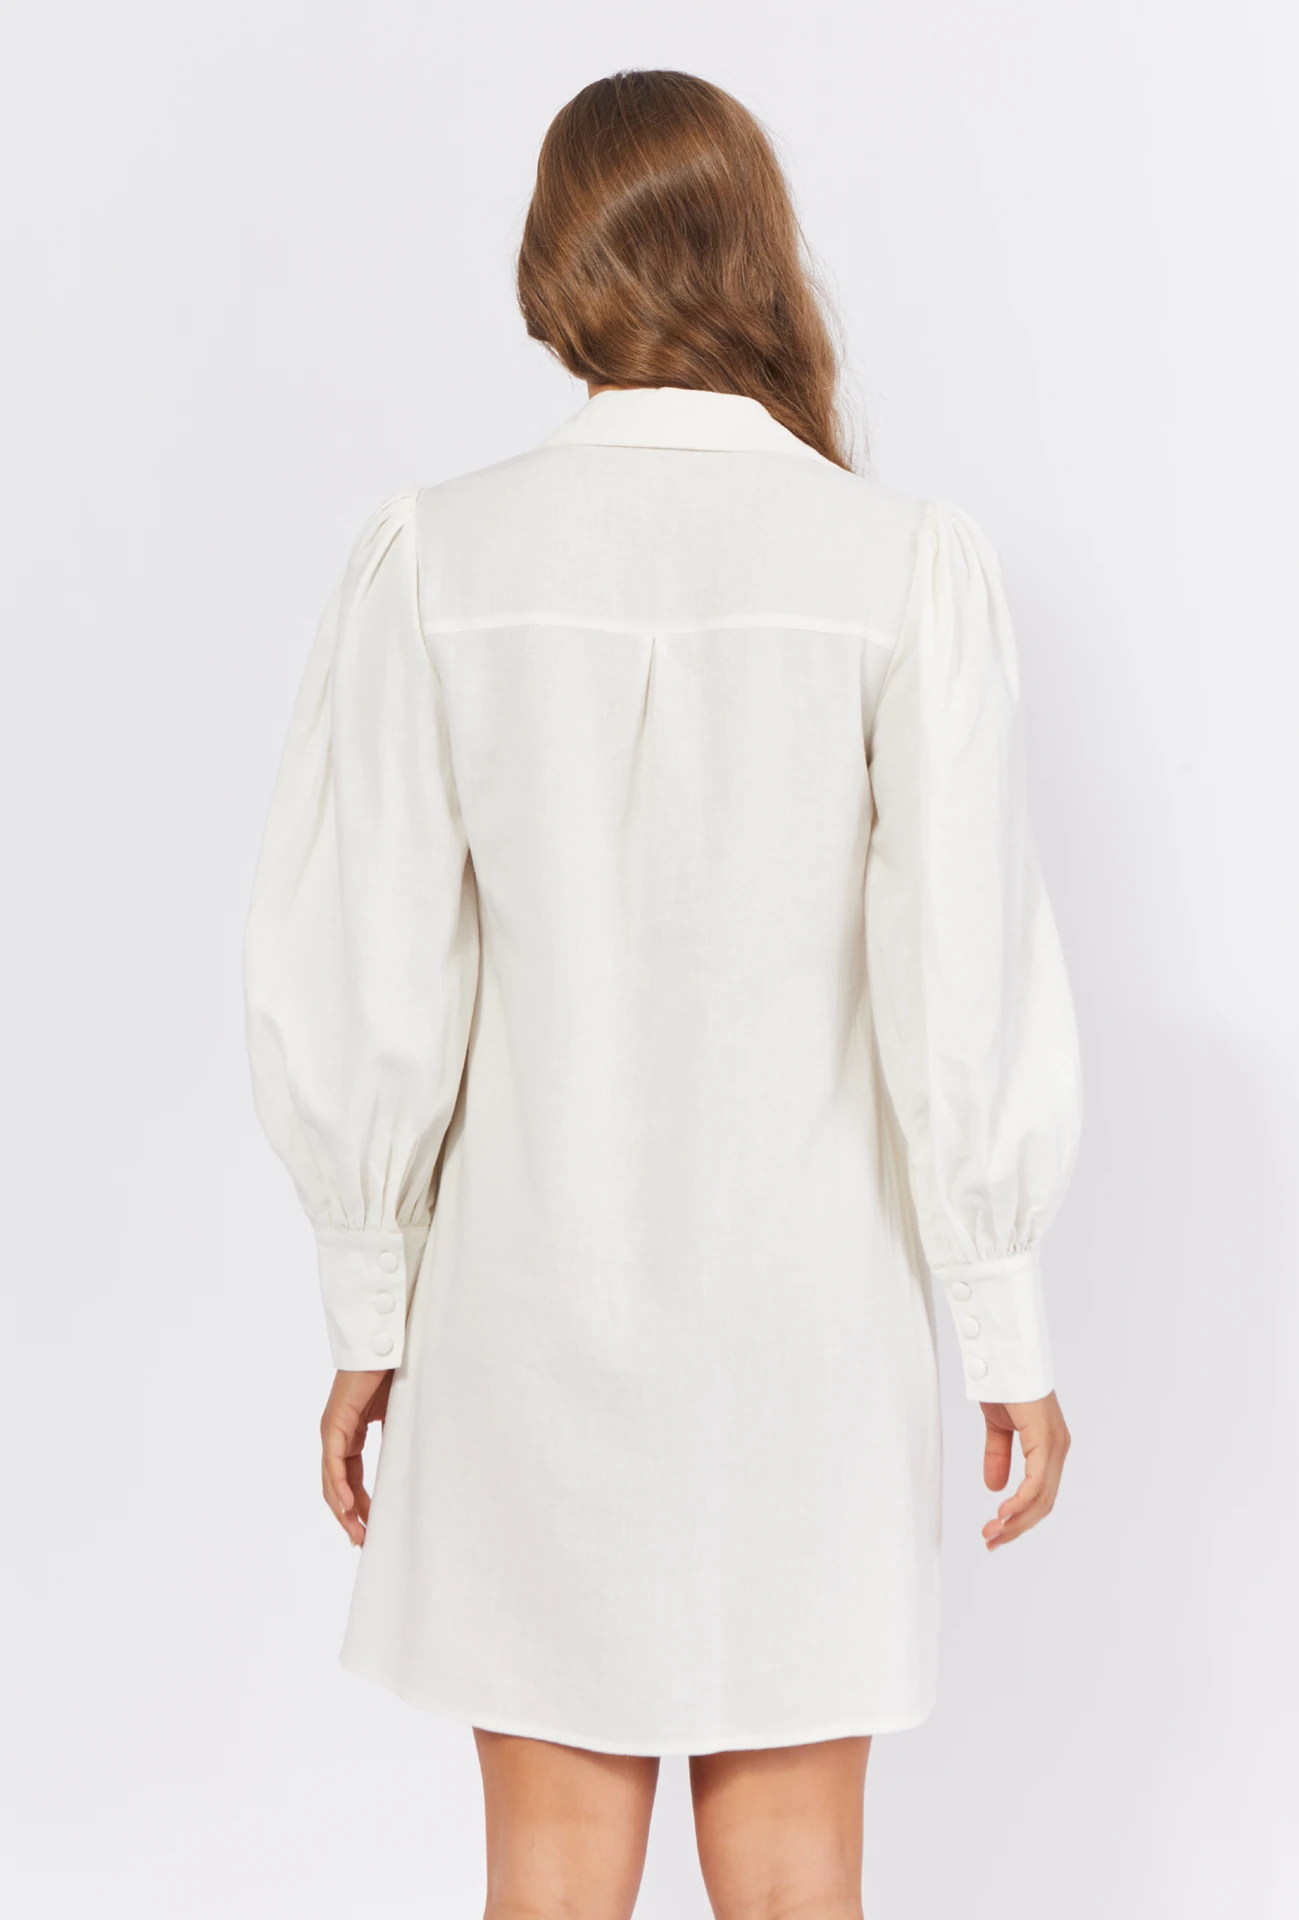 LEILANI MINI DRESS - WHITE